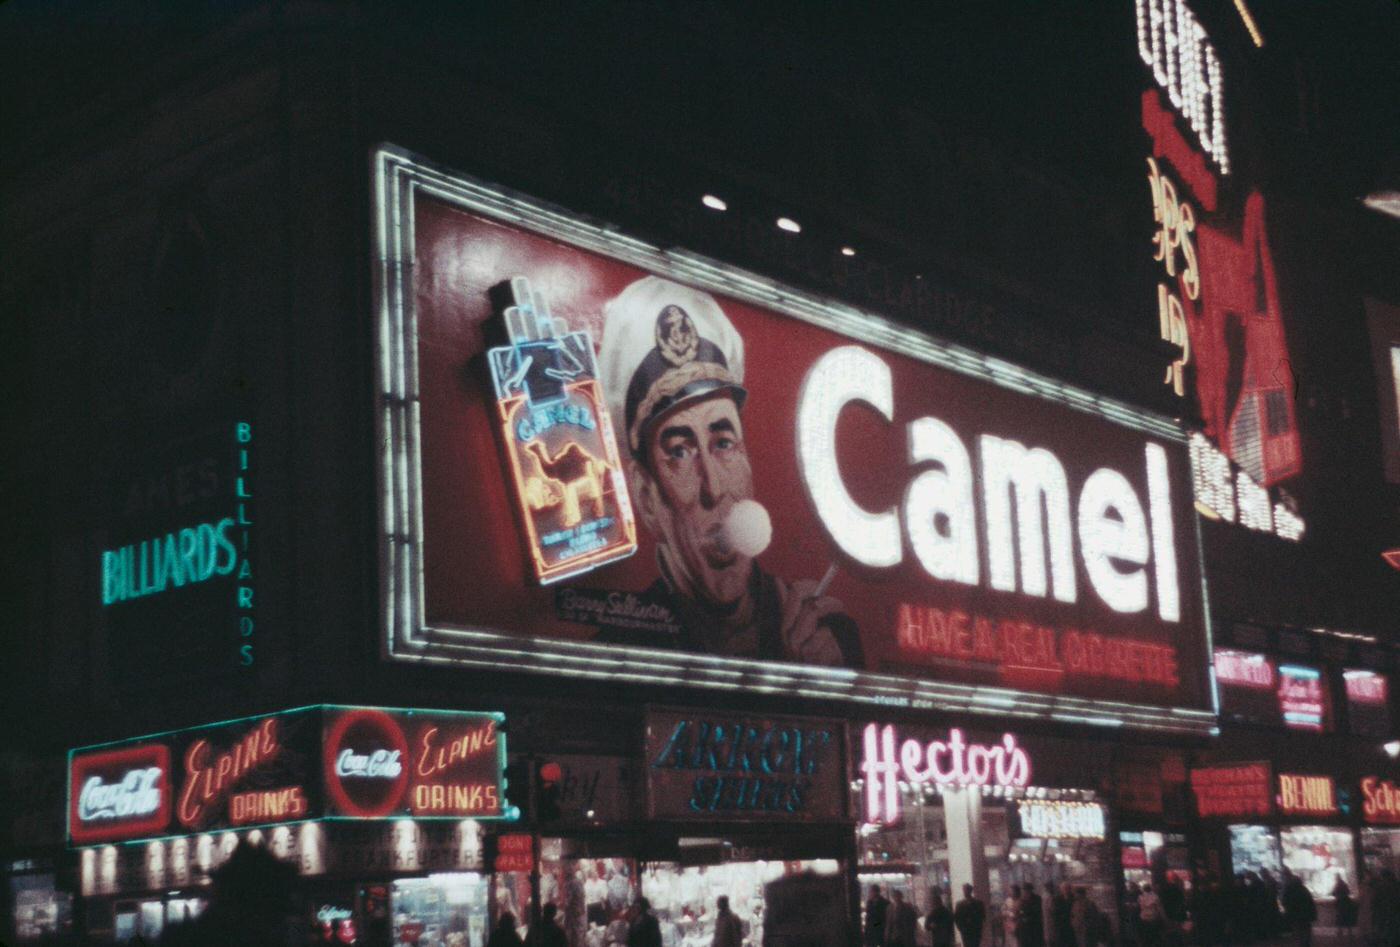 Camel Cigarettes Advertisement Illuminated At Night In Times Square, Manhattan, 1957.